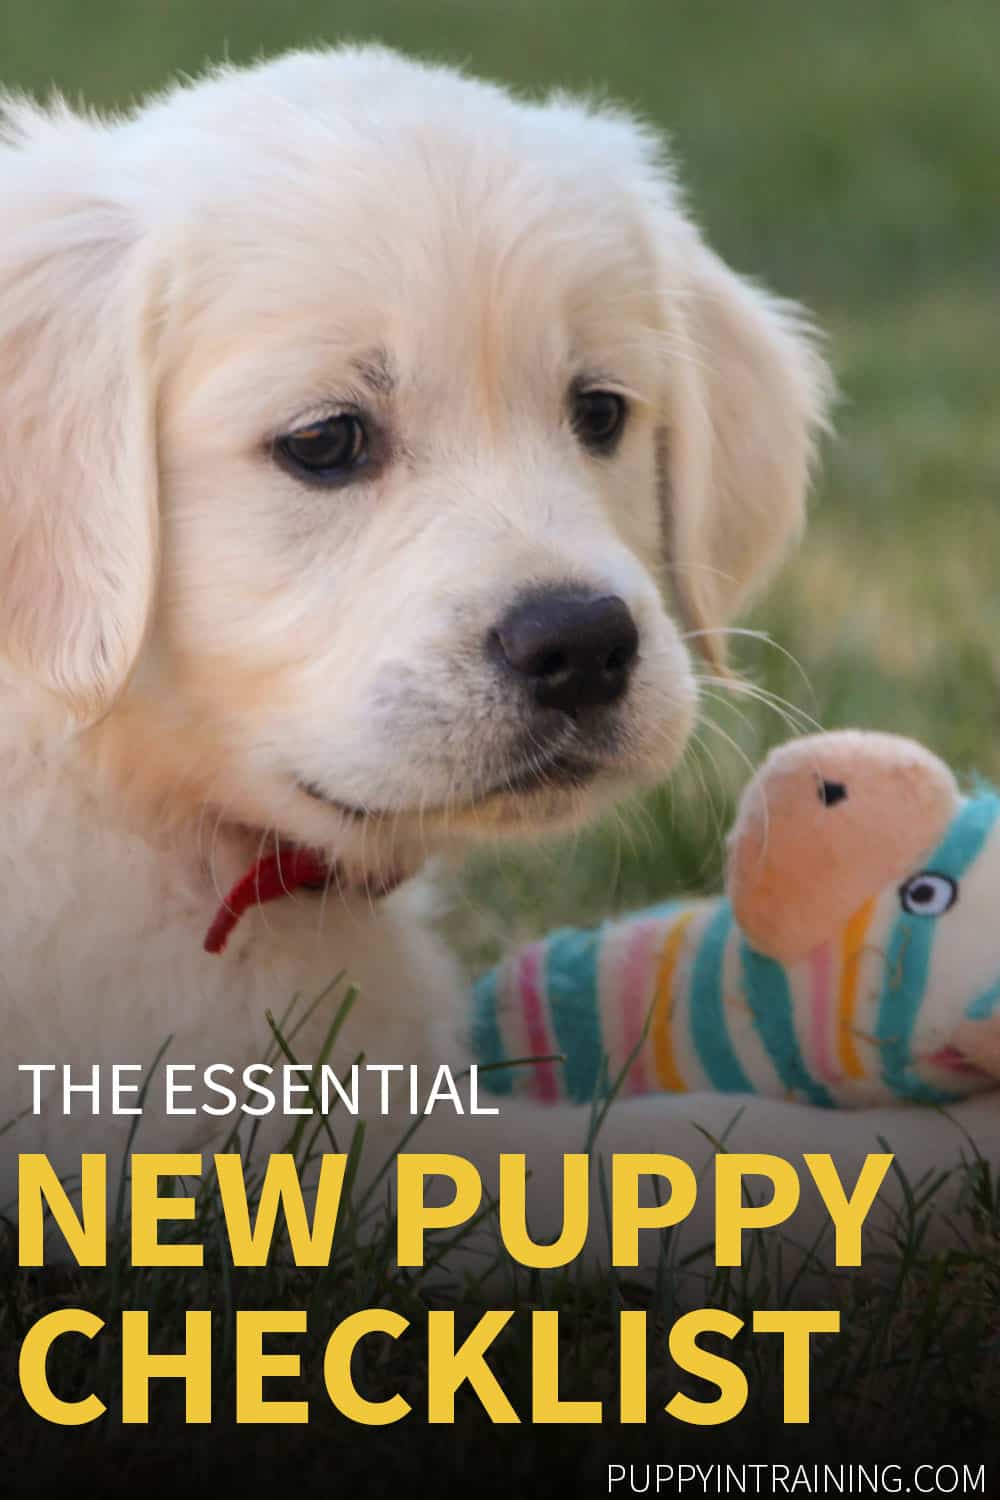 https://puppyintraining.com/new-puppy-checklist-im-getting-a-new-puppy-what-do-i-need/new-puppy-checklist/